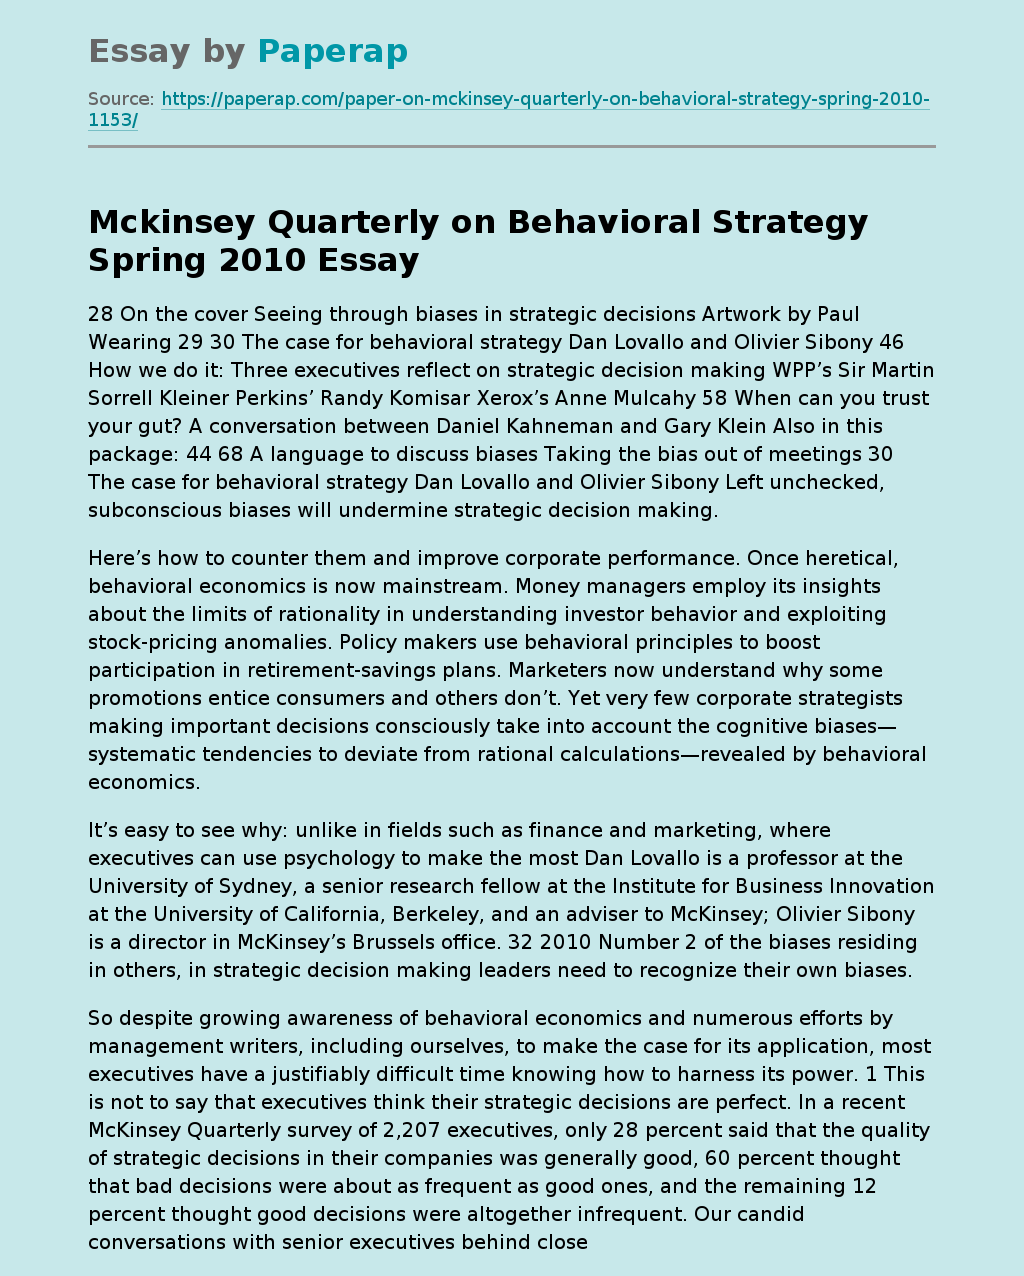 Mckinsey Quarterly on Behavioral Strategy Spring 2010